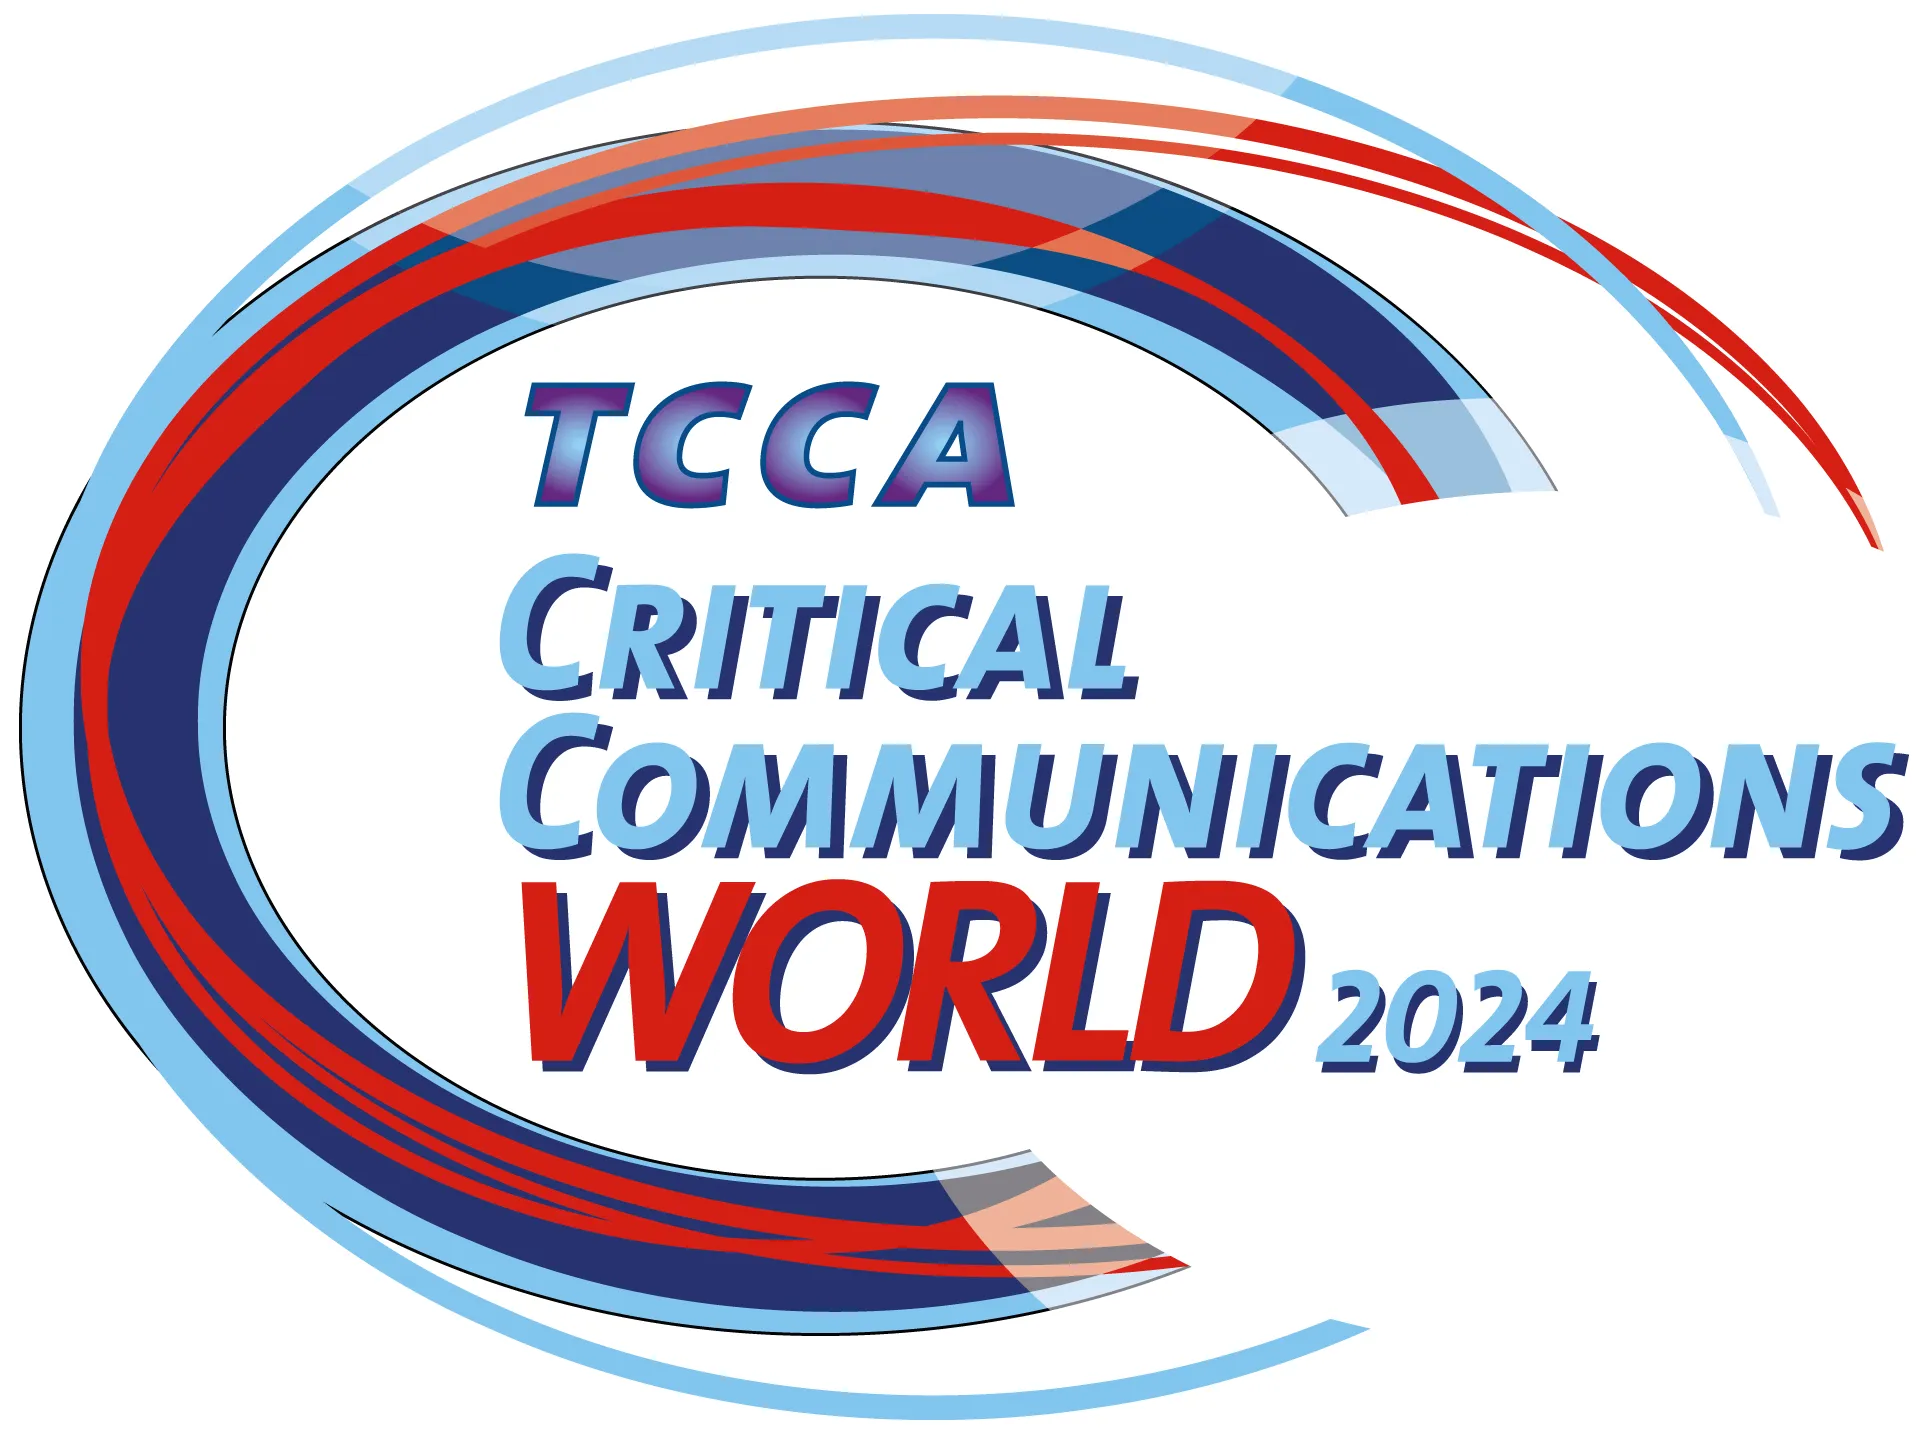 CCW Dubai, Critical Communications World